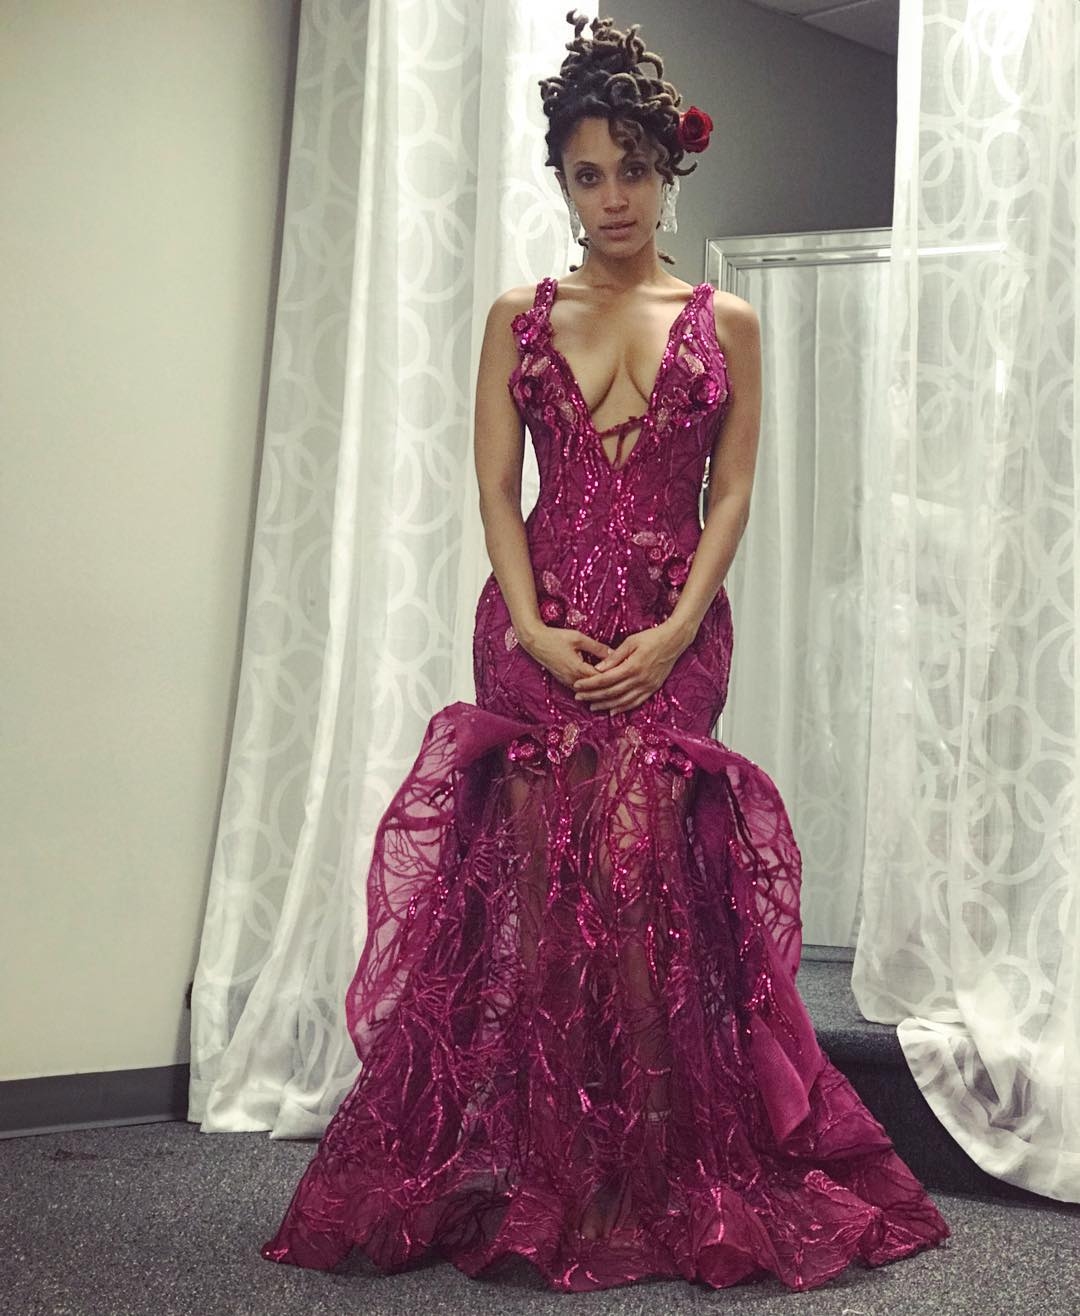 Viviane Valerius Black Haitian Bridal Wear Fashion Designer Florida